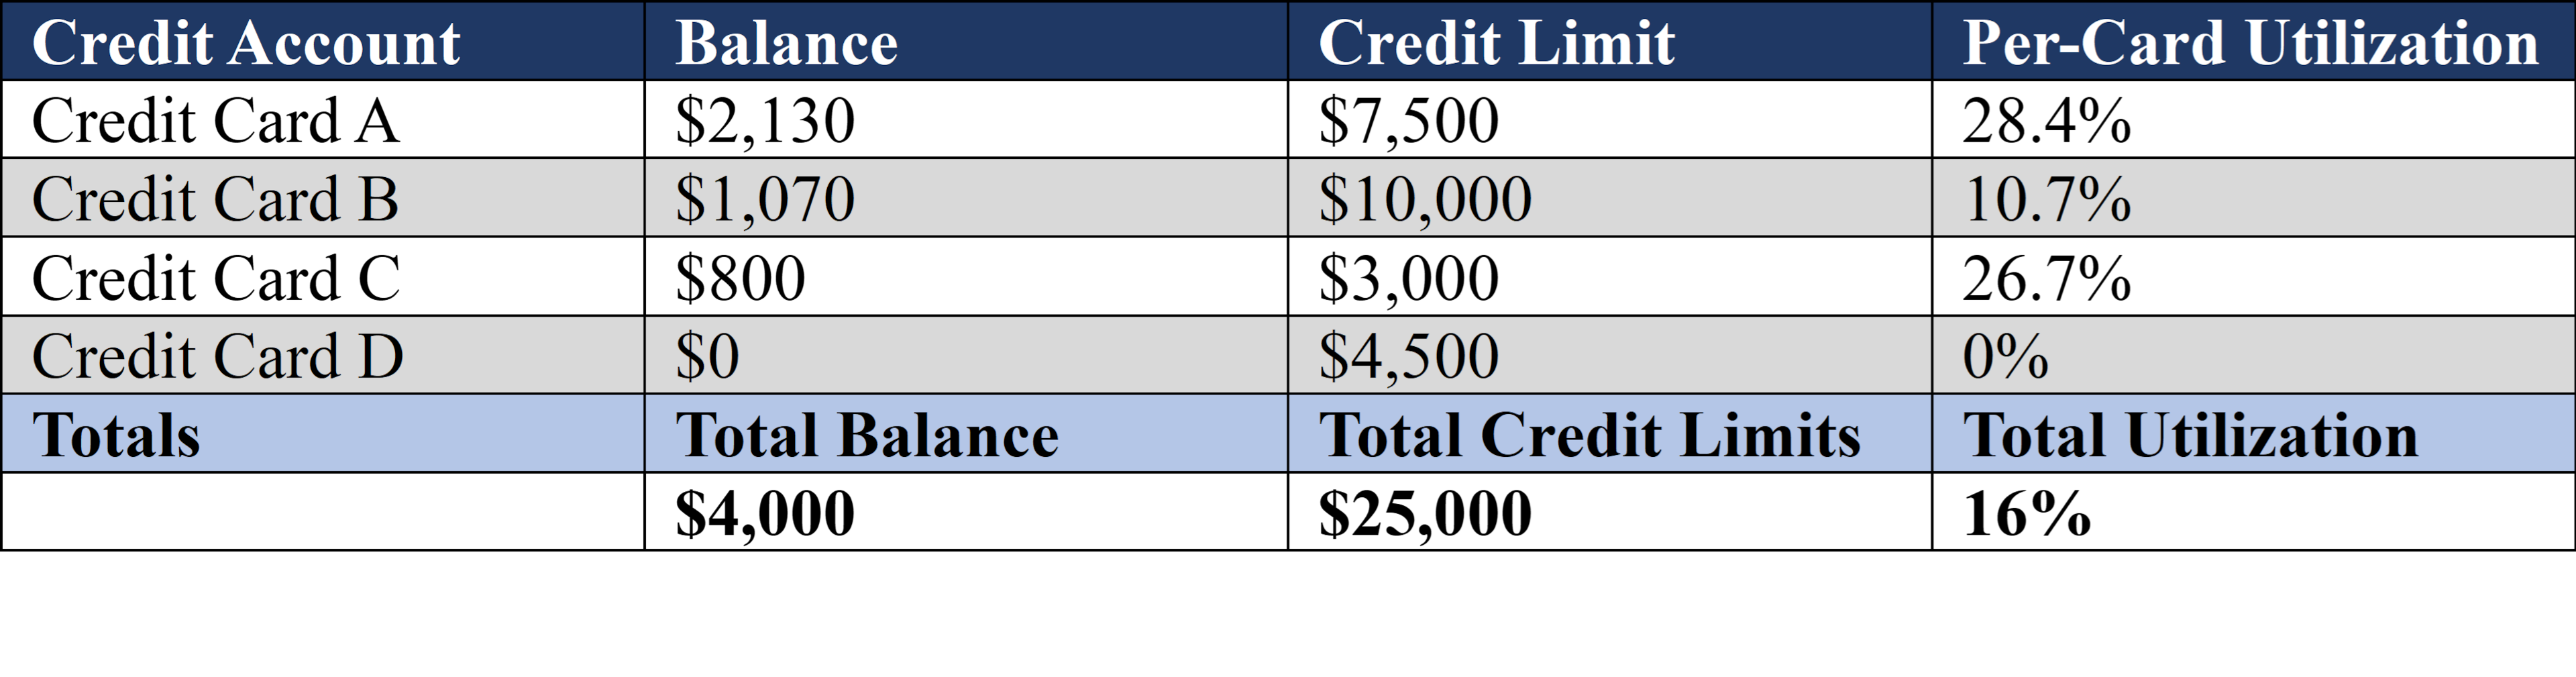 Credit Utilization Table, total credit limit, balance and credit limit, credit card utilization, total credit utilization rate